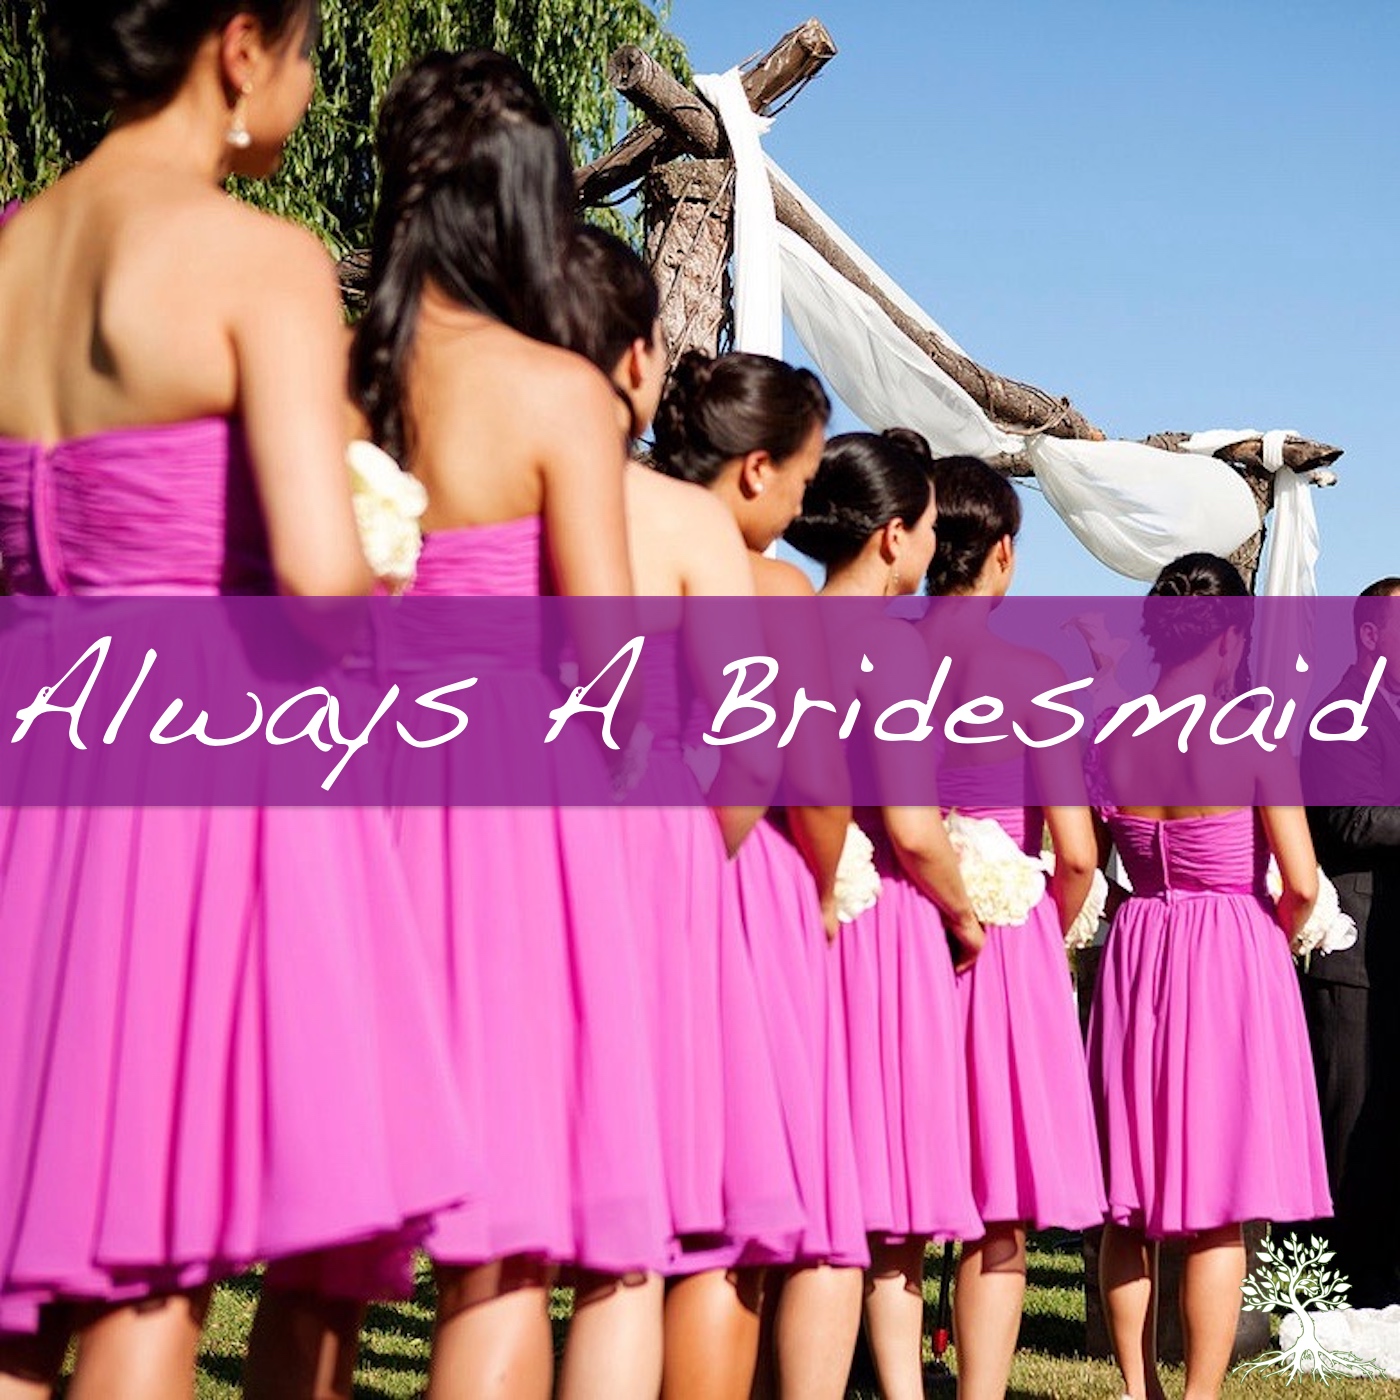 Always a Bridesmaid (Natalia Terfa 11/12/17)